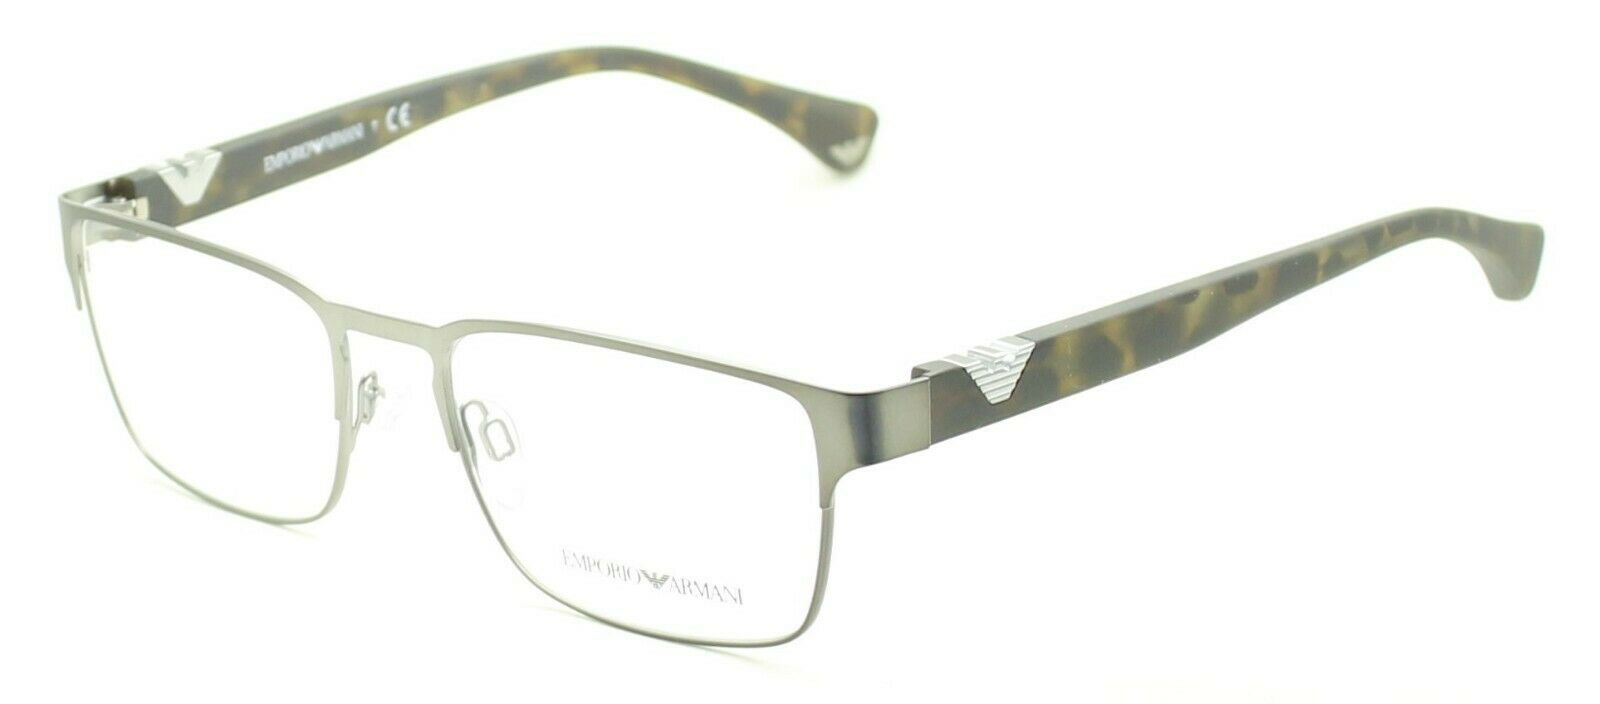 EMPORIO ARMANI EA1027 3246 53mm Eyewear FRAMES RX Optical Glasses Eyeglasses-New